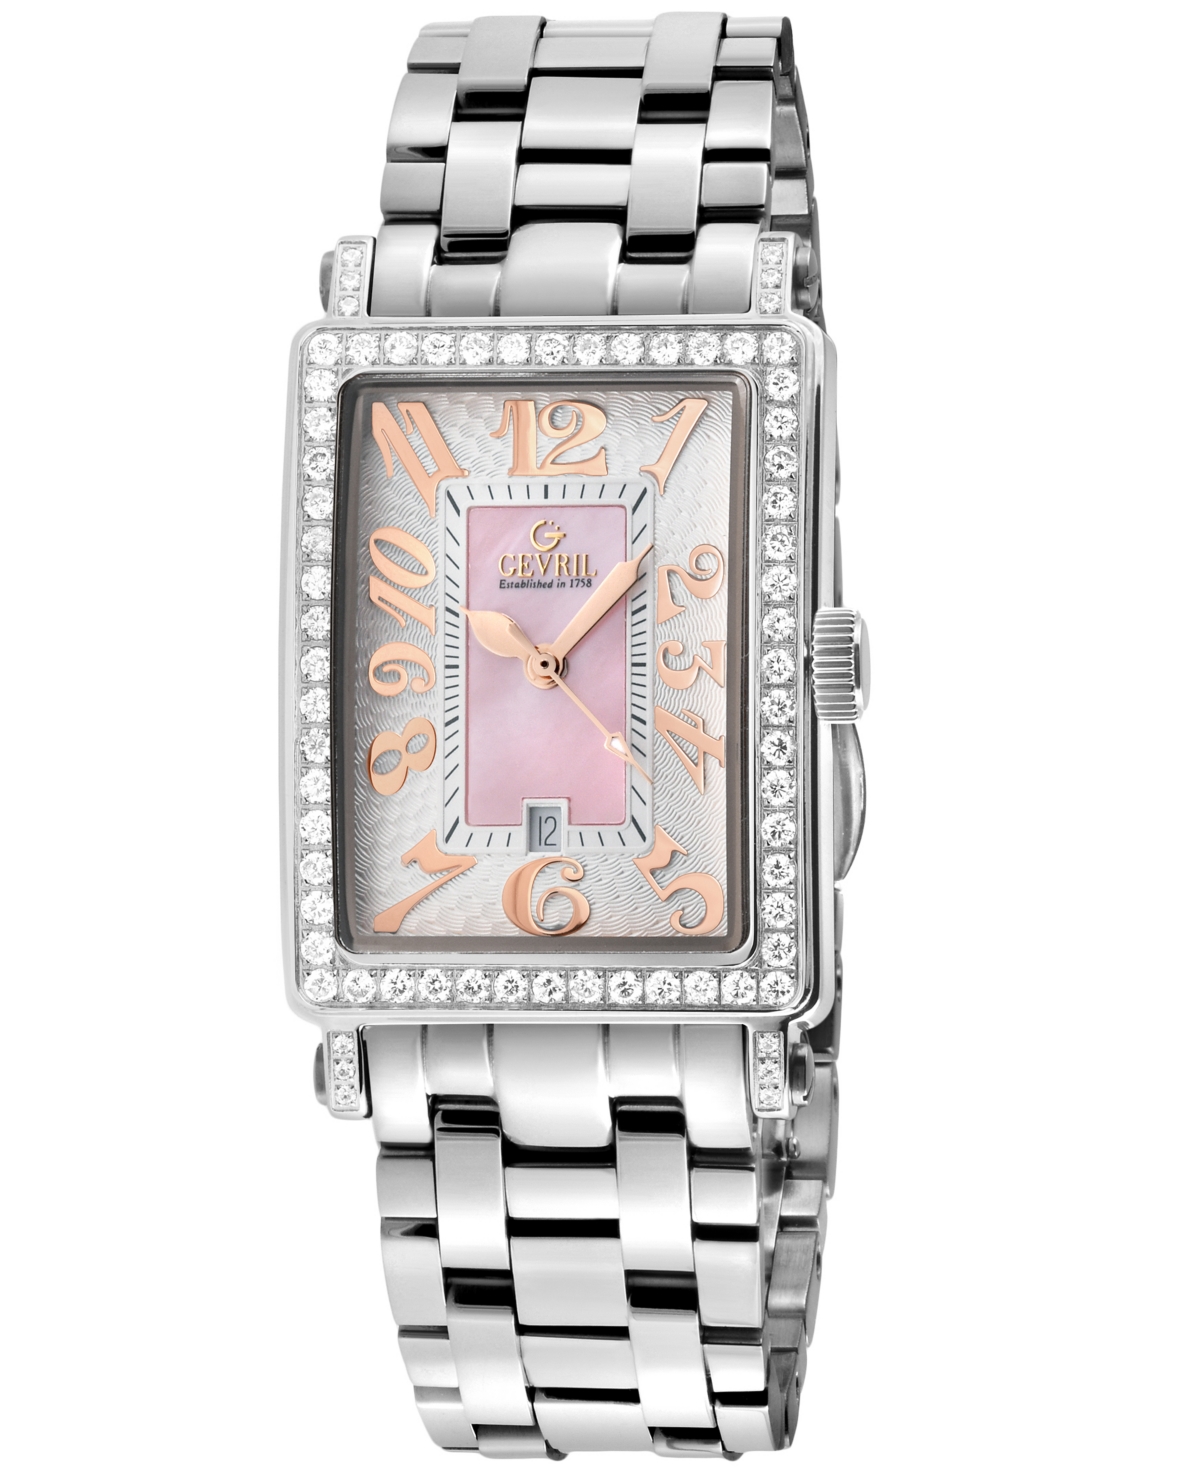 Gevril Women's Avenue of Americas Mini Swiss Quartz Diamond Accents Silver-Tone Stainless Steel Bracelet Watch 25mm x 32mm